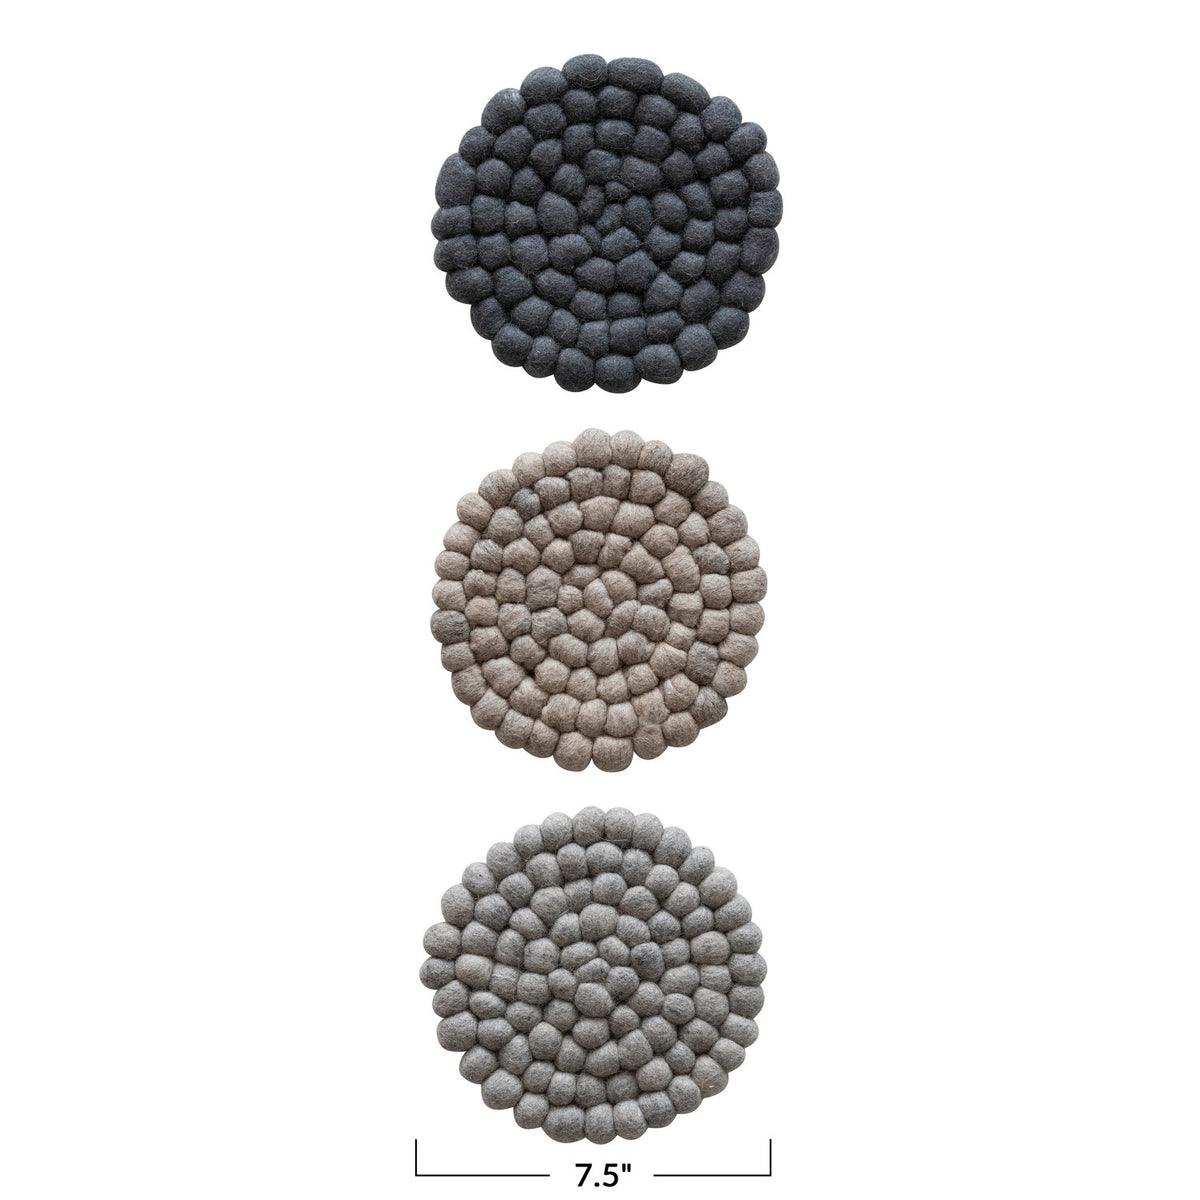 7.5" Round Handmade Wool Felt Ball Trivets in 3 Colors